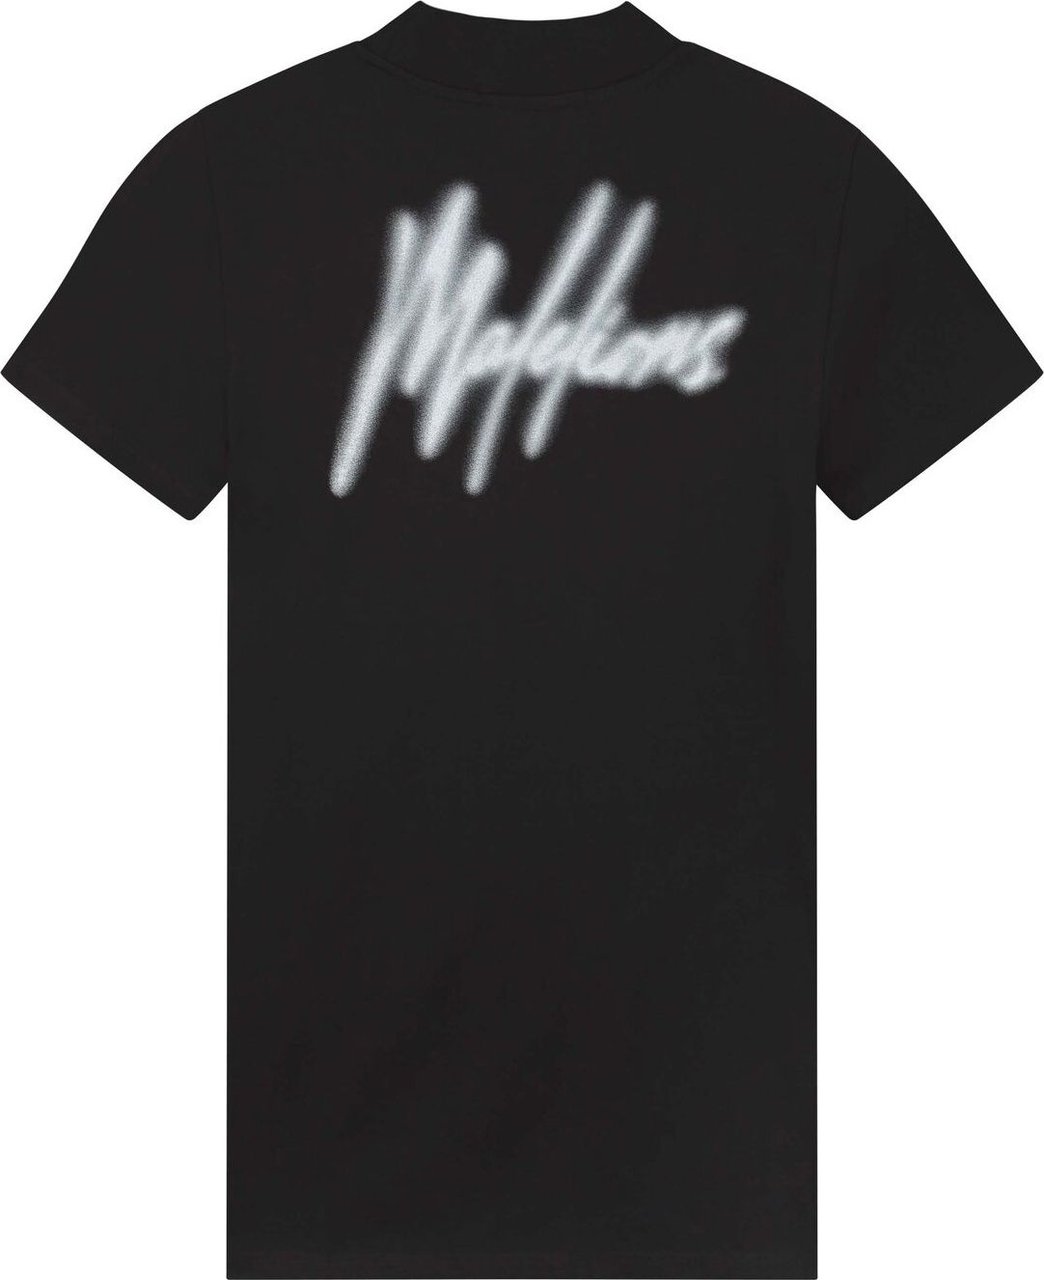 Malelions Blurred T-Shirt Dress - Black/White Zwart